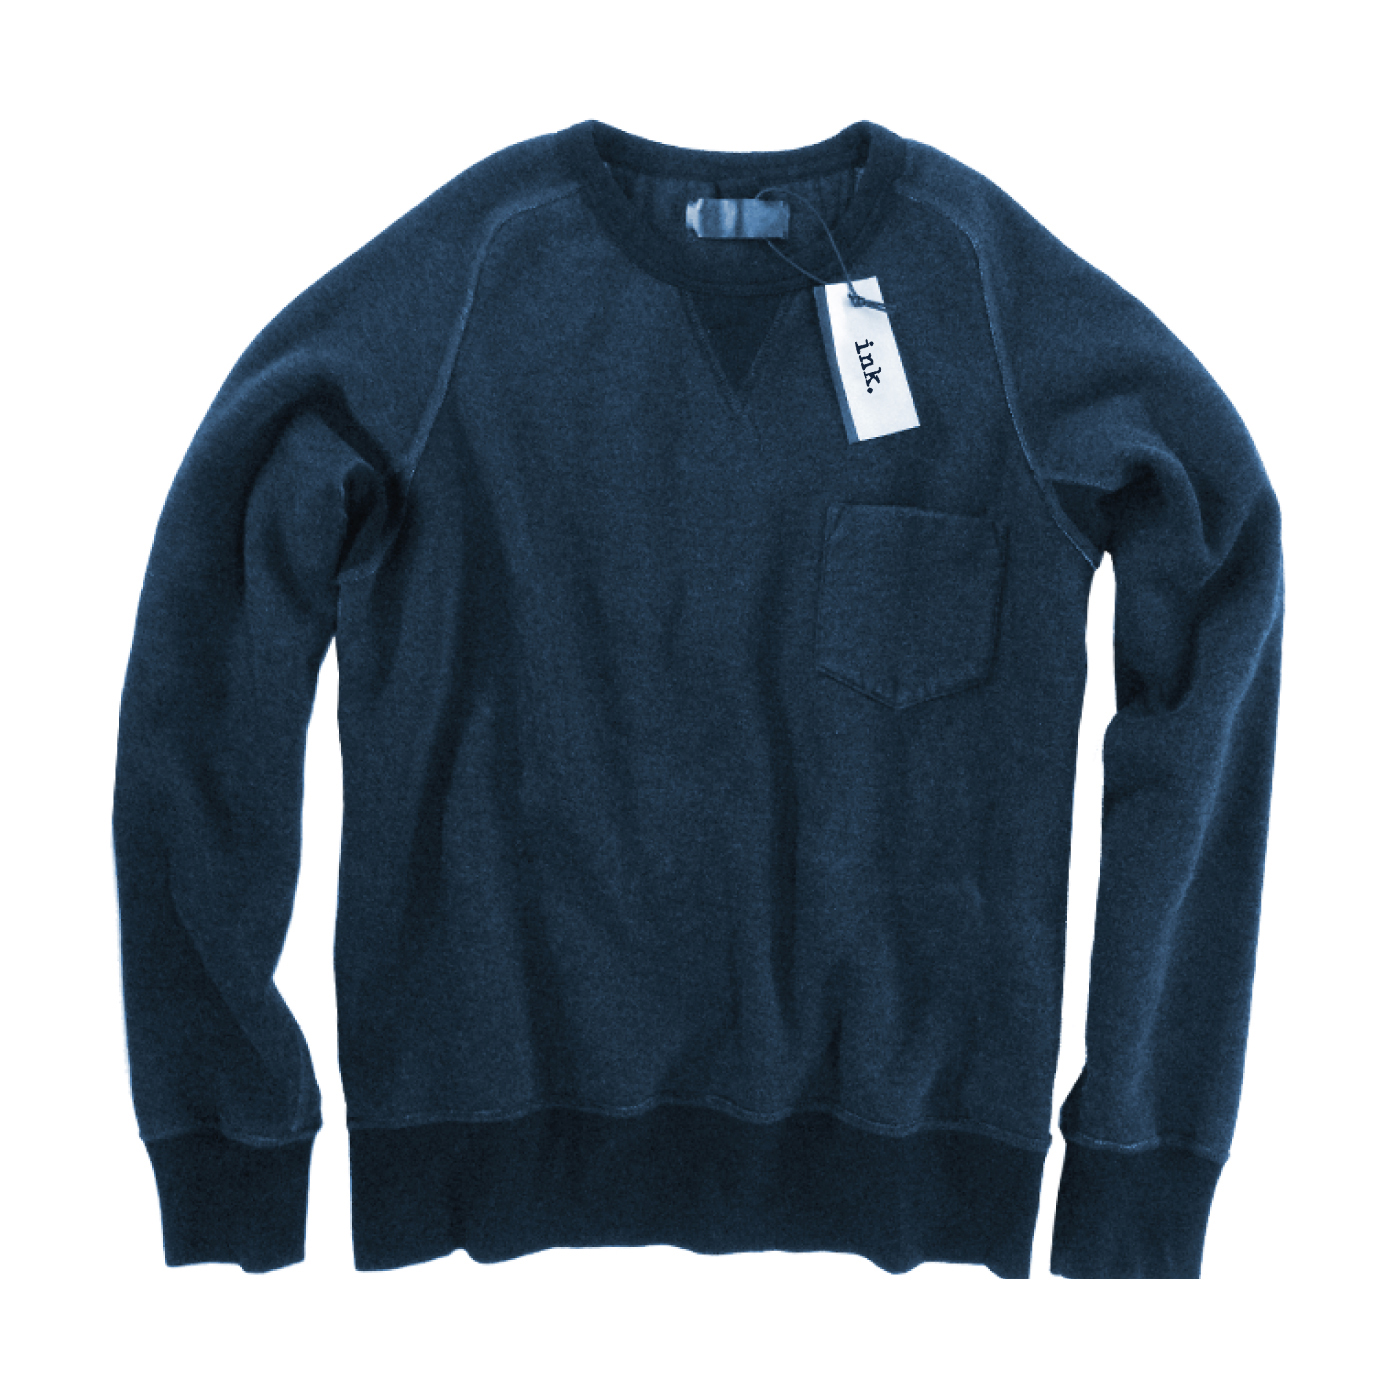 Pollock-navy-crew-neck-sweater-with-pocket-1